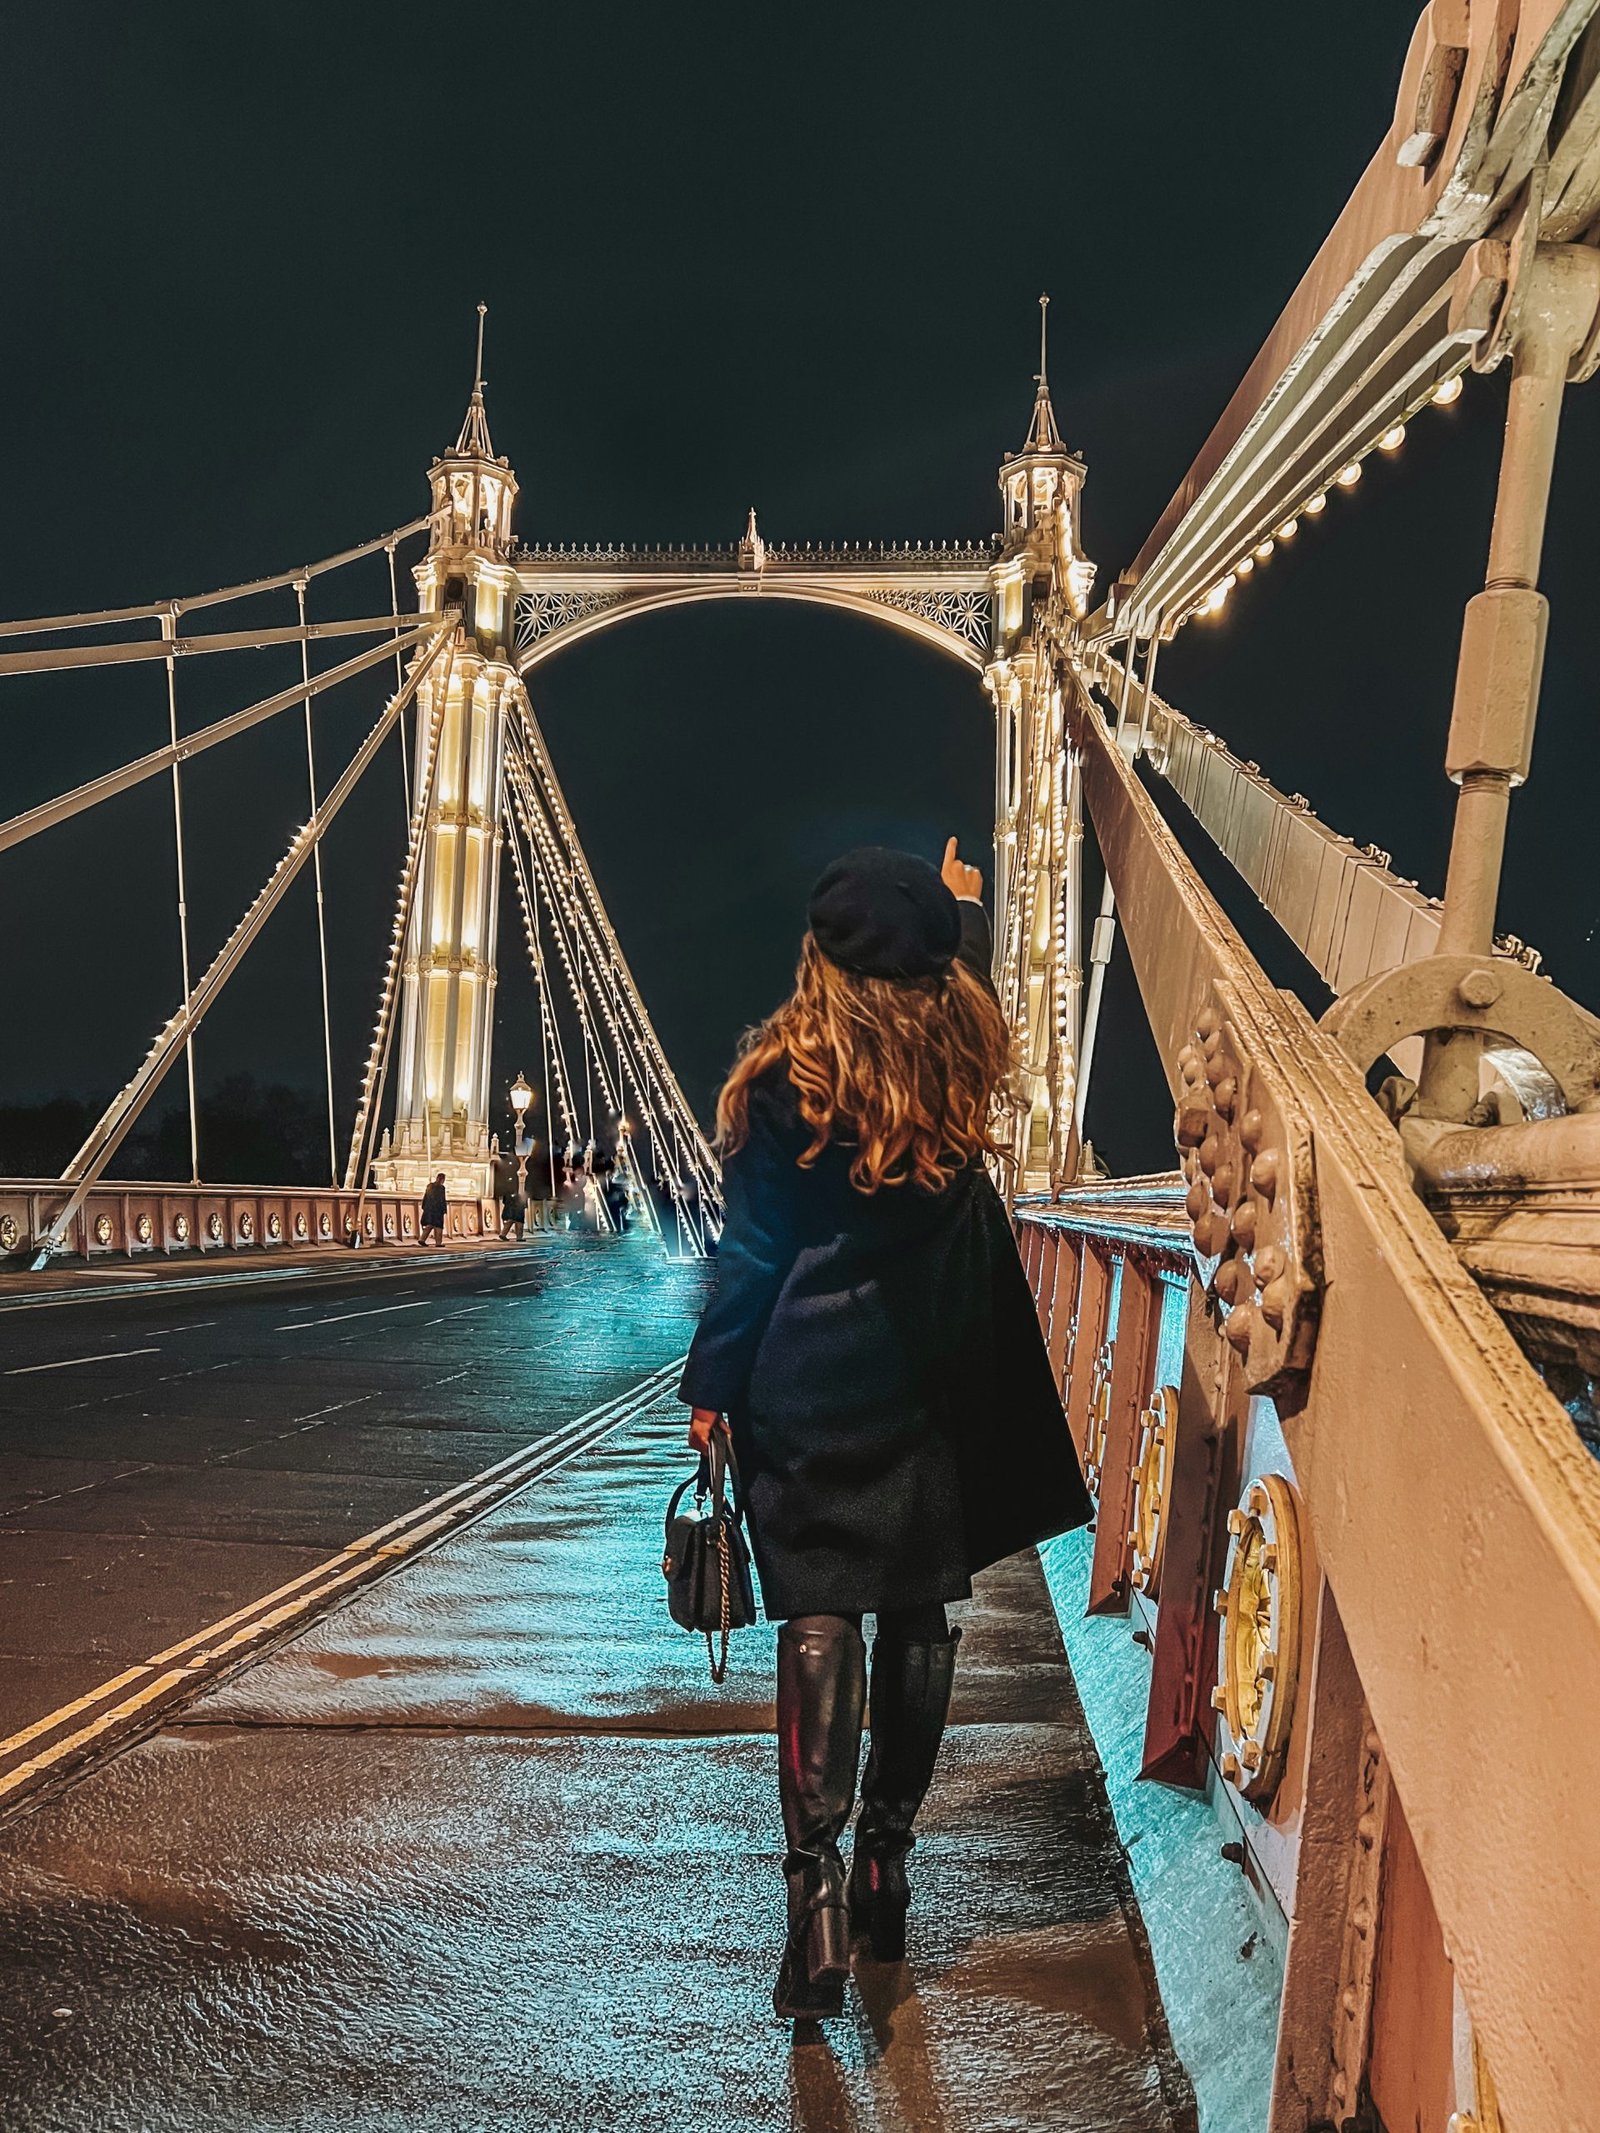 Albert Bridge Chelsea . Girl in Boots and Black coat on London Bridge.
Most Instagrammable spots in London 